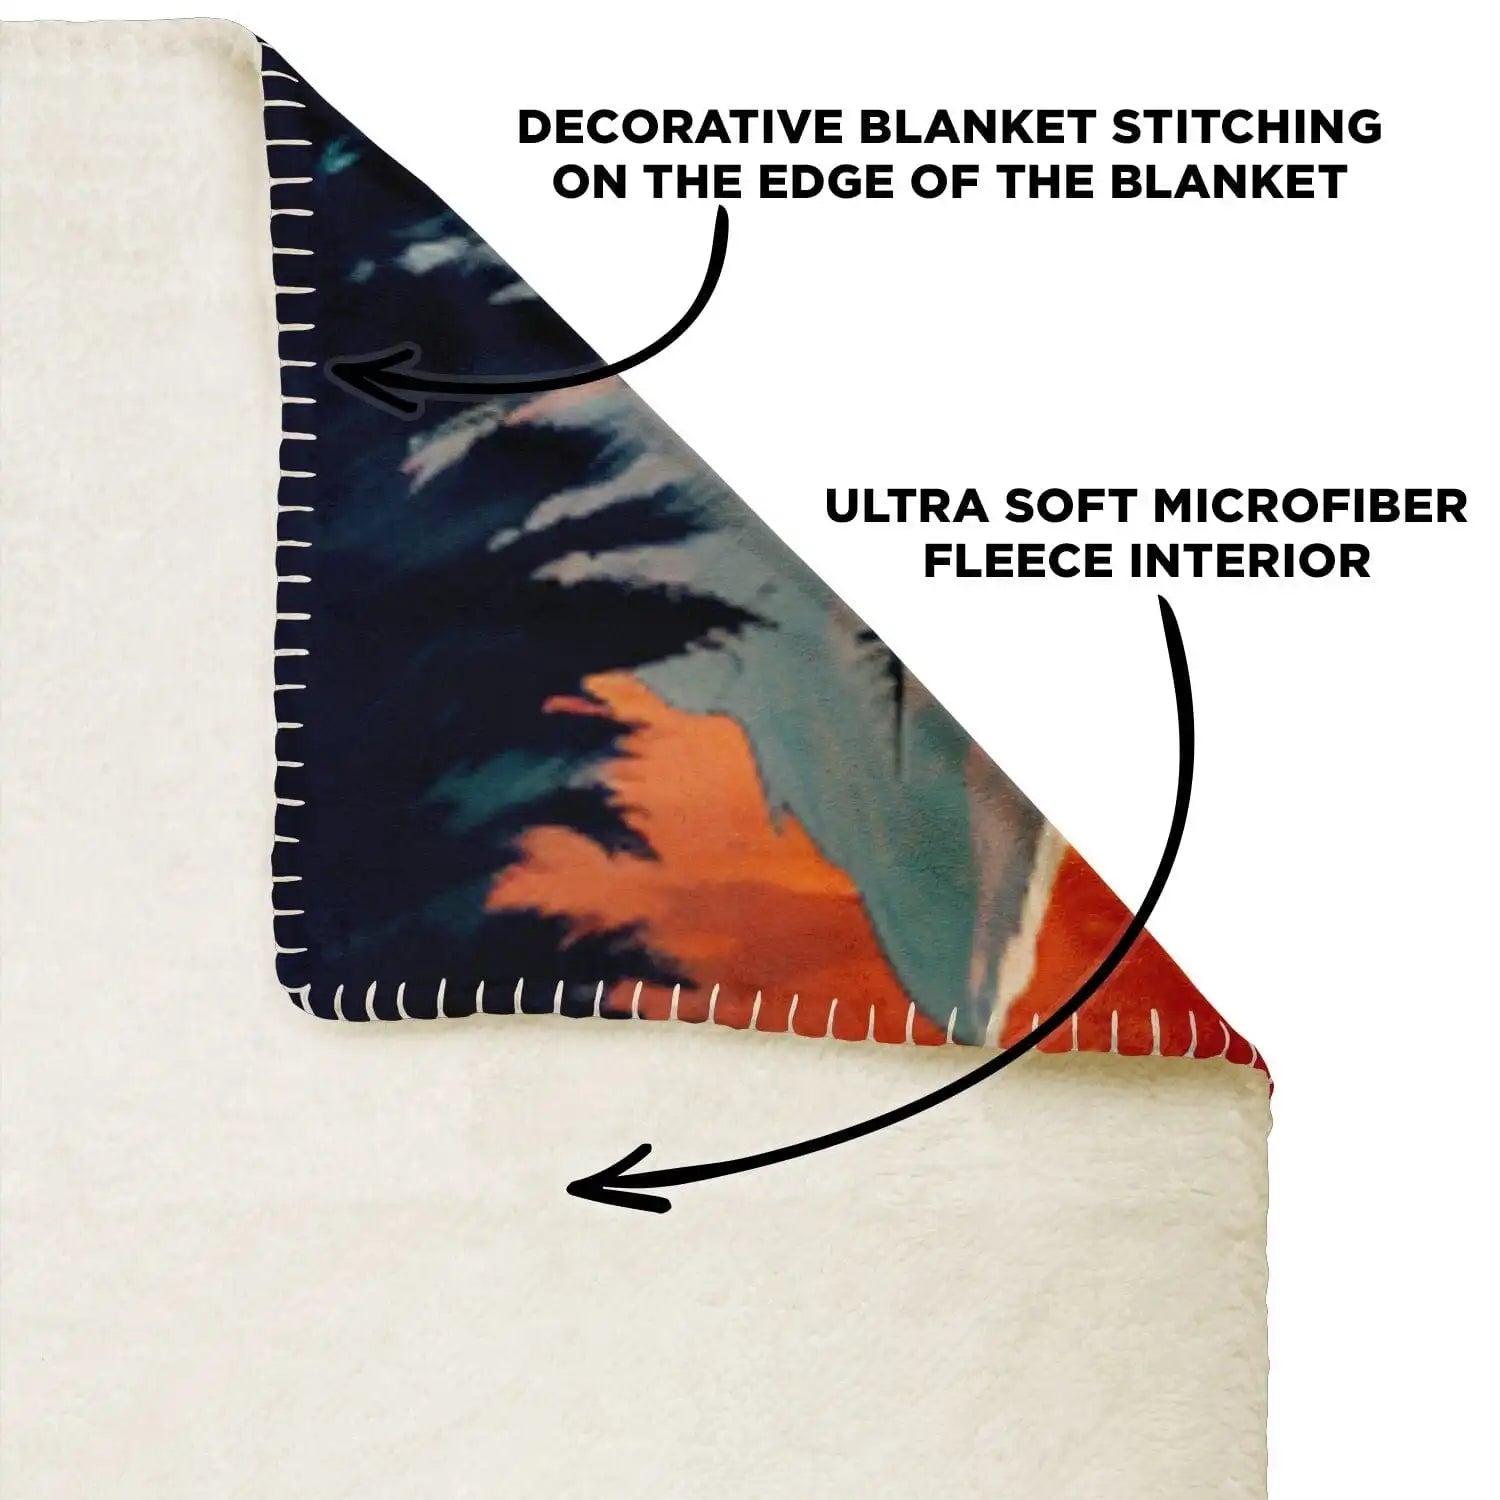 Ultrasoft microfiber fleece blanket